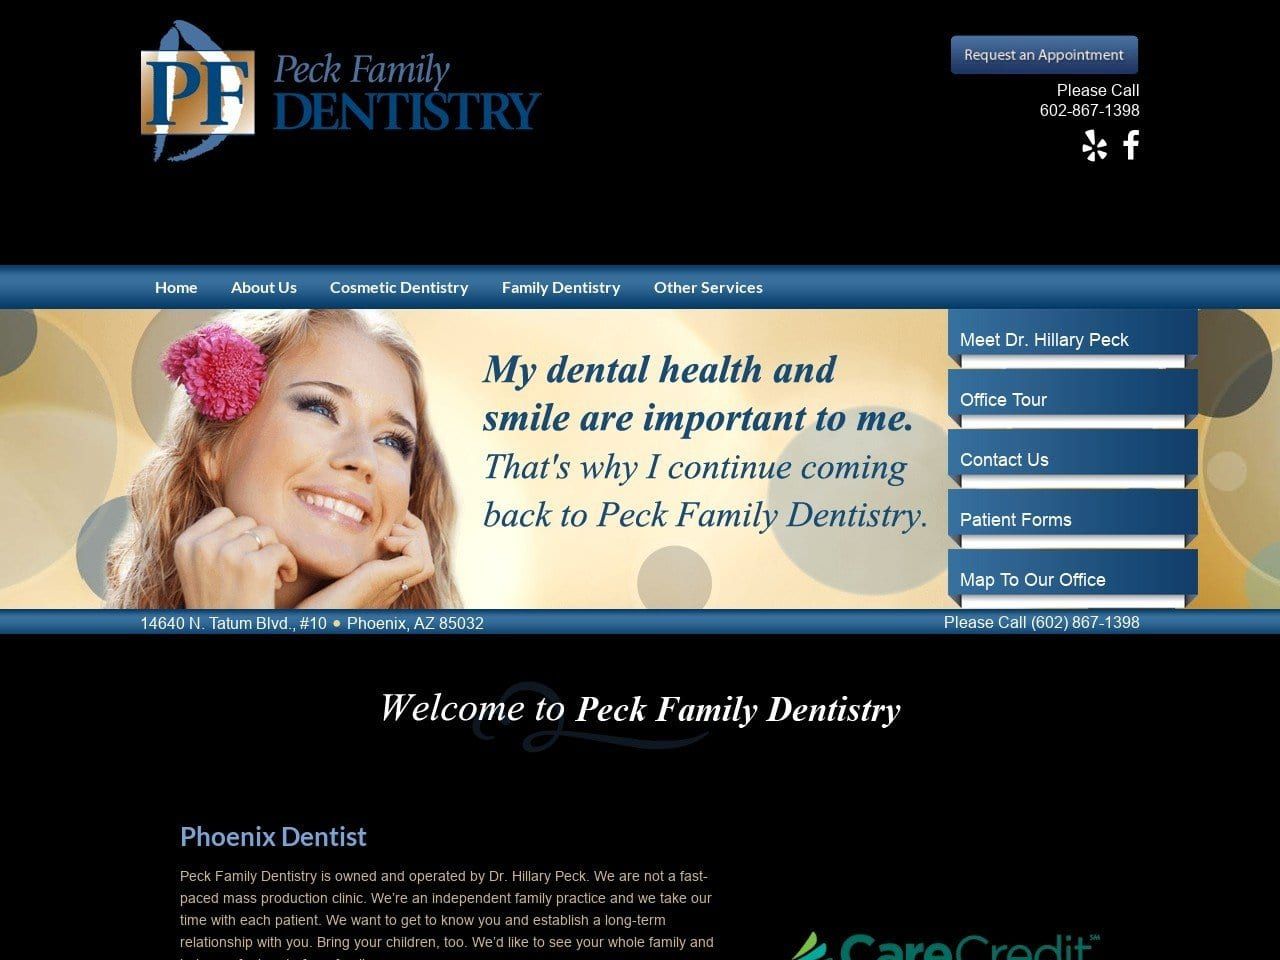 Peck Family Dentistry Website Screenshot from peckfamilydentistry.com